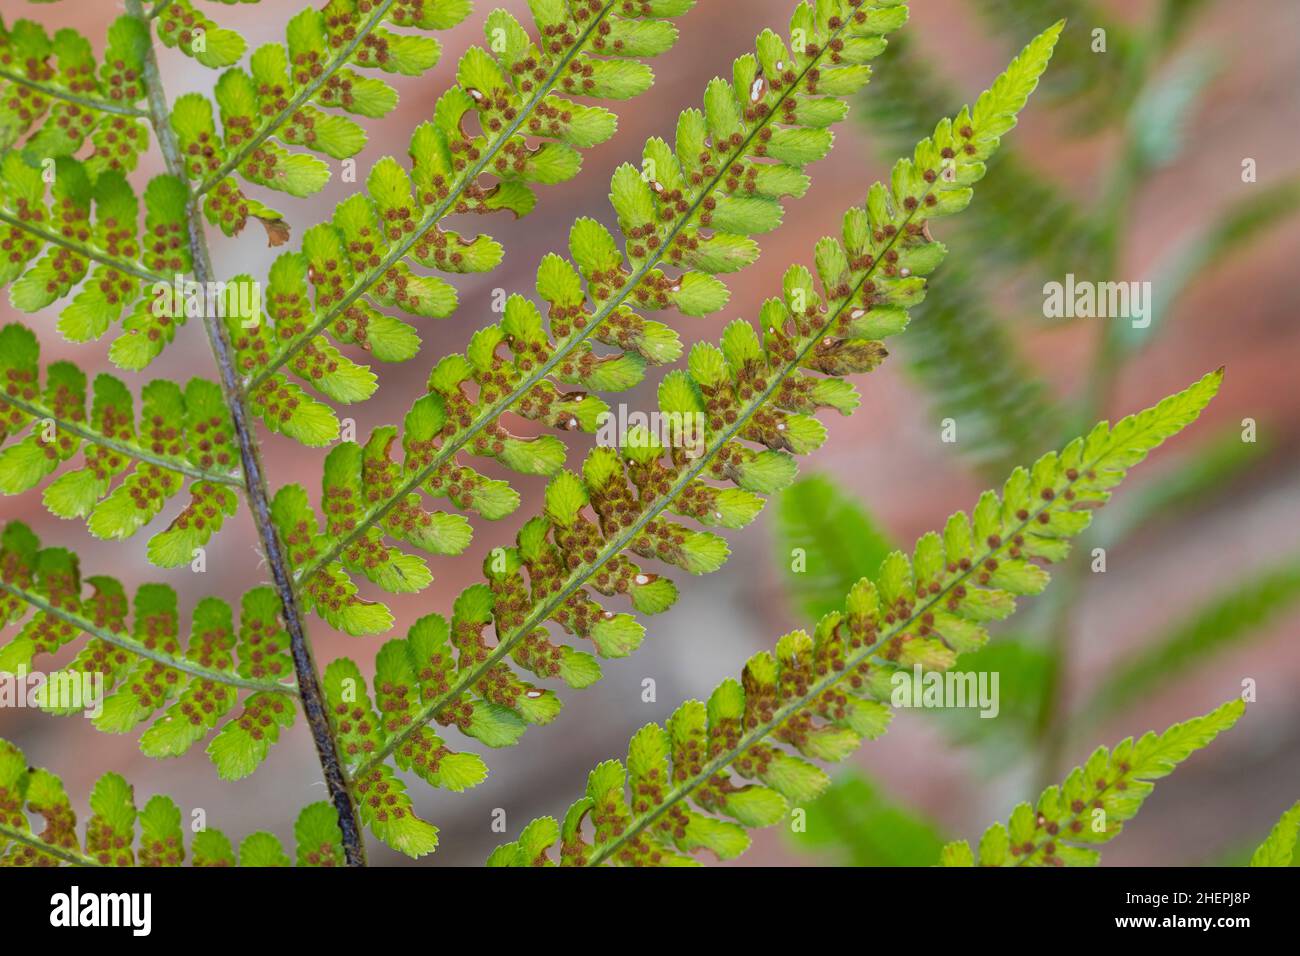 Male fern, Worm fern (Dryopteris filix-mas), sporangia on the underside of a frond, Germany Stock Photo